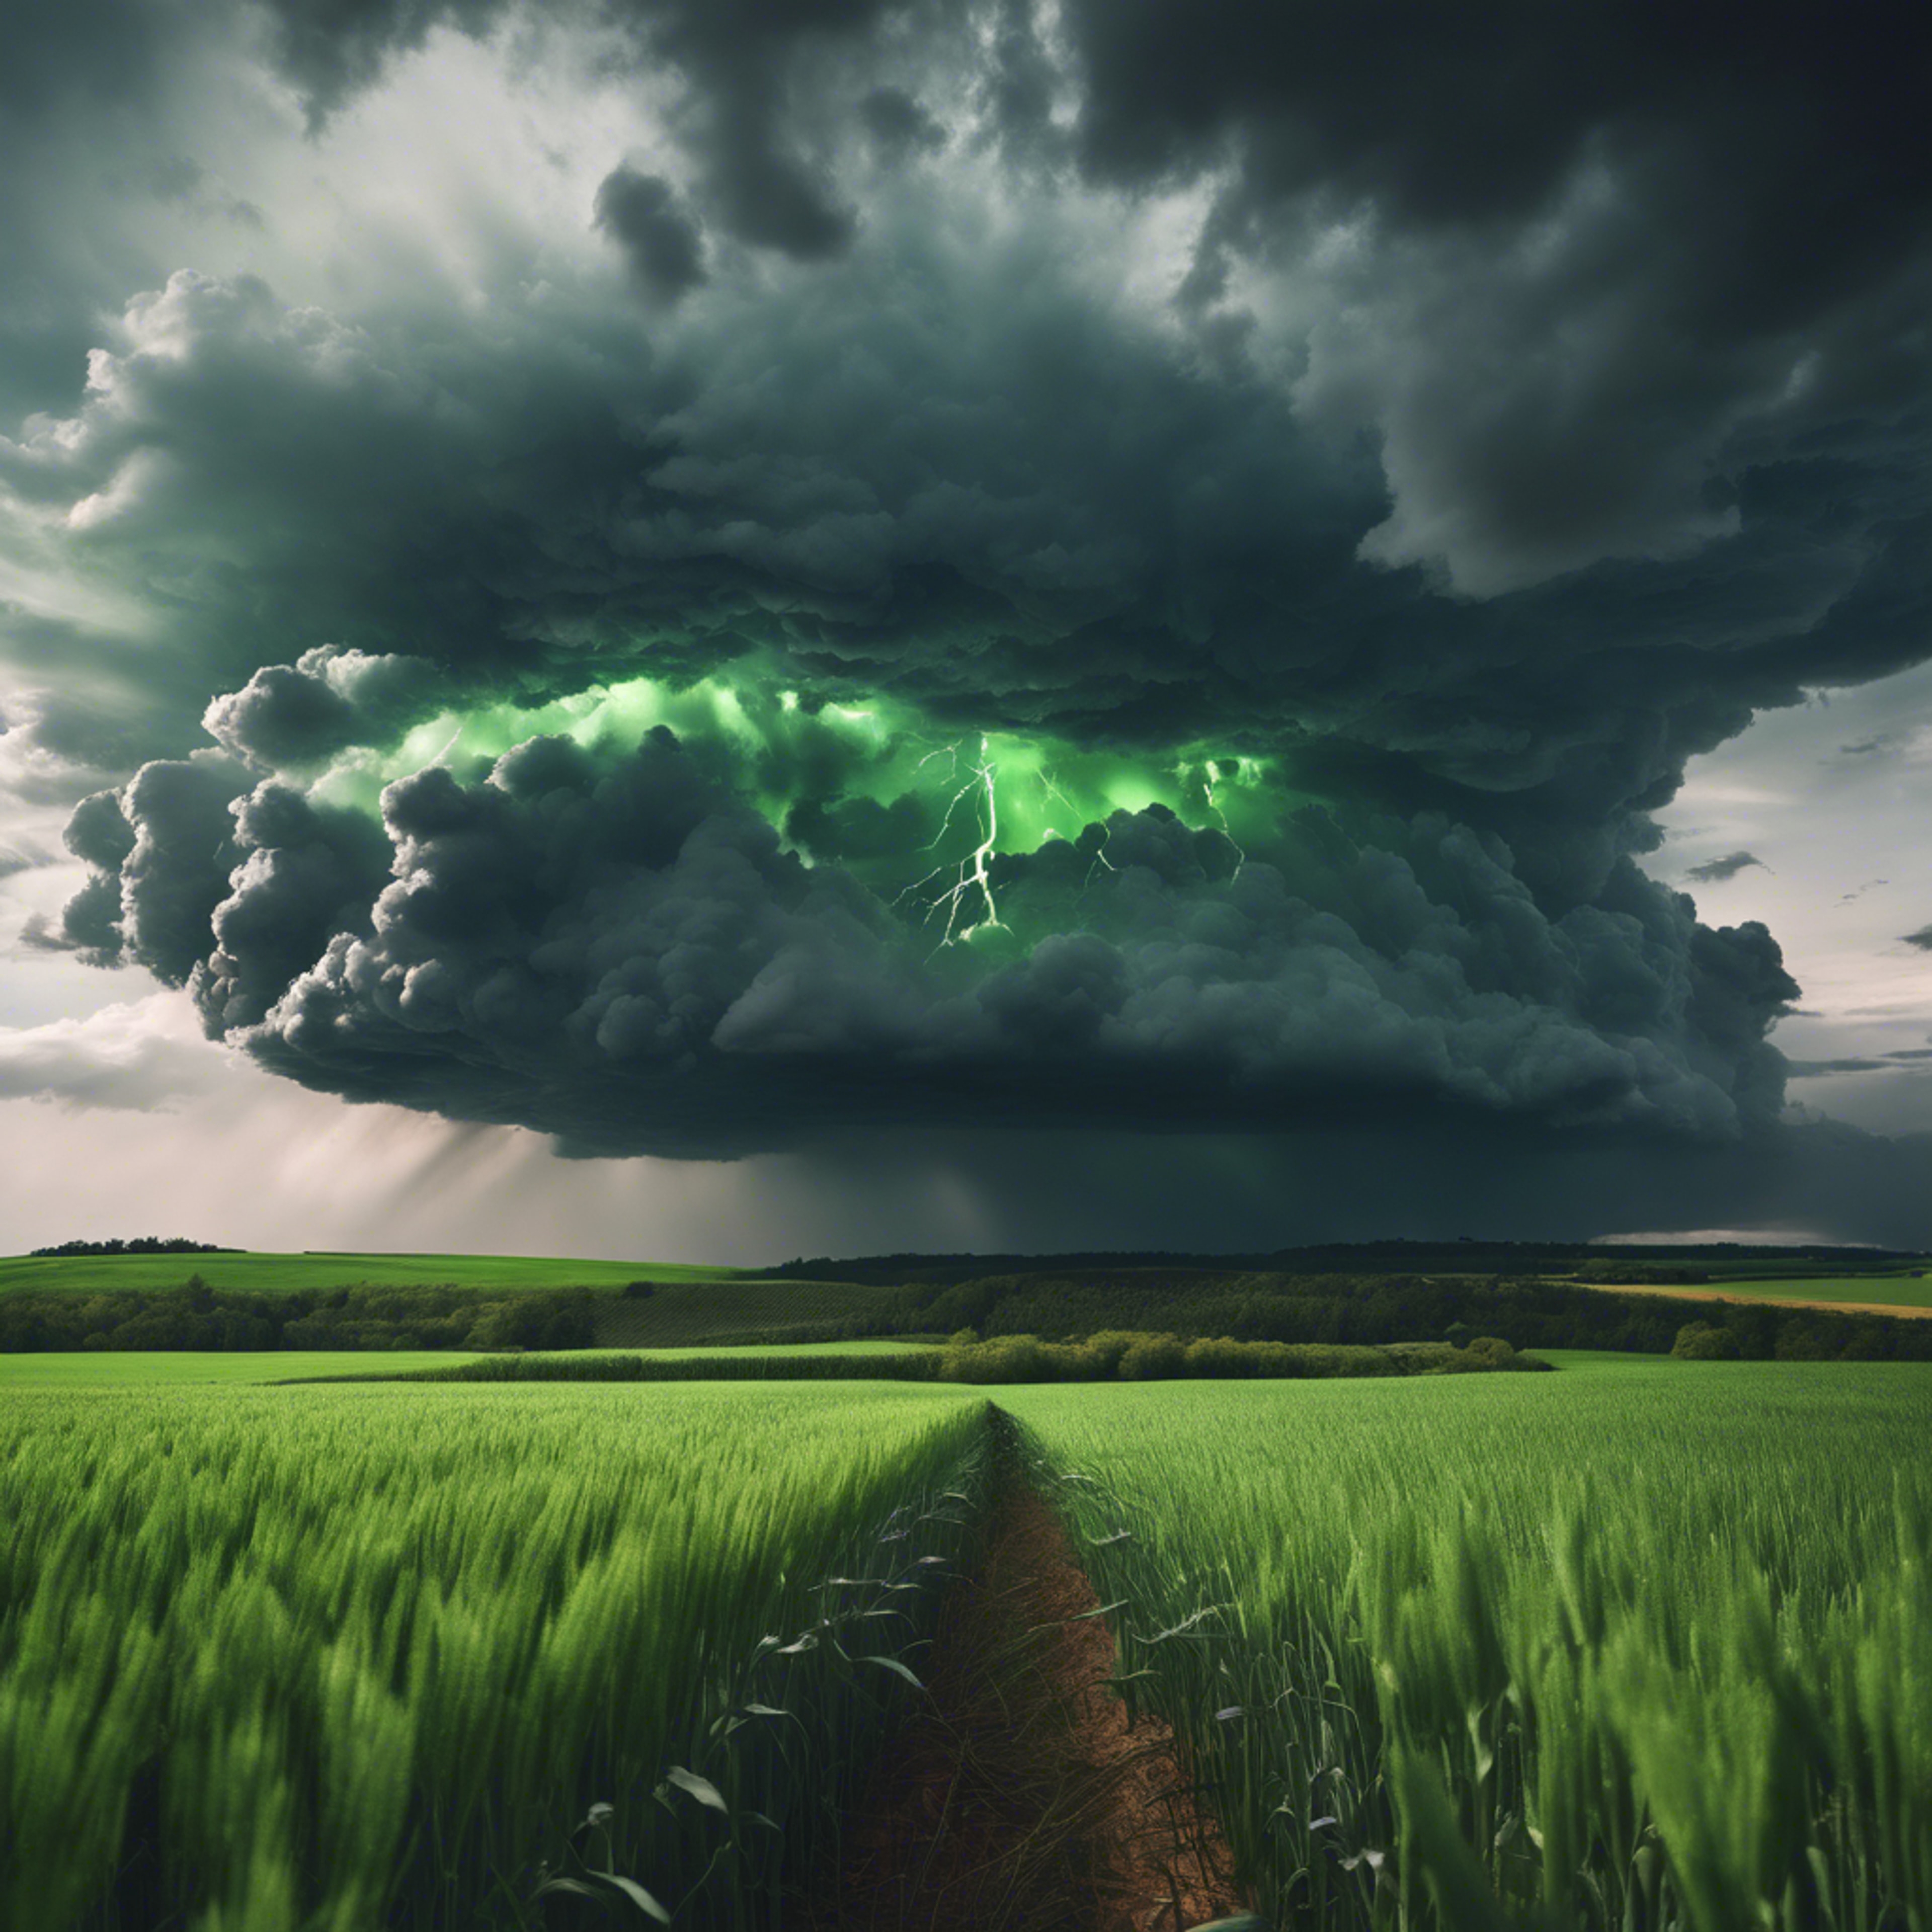 A dramatic black storm cloud over a vibrant green wheat field.壁紙[2ef08a34070042519f8d]